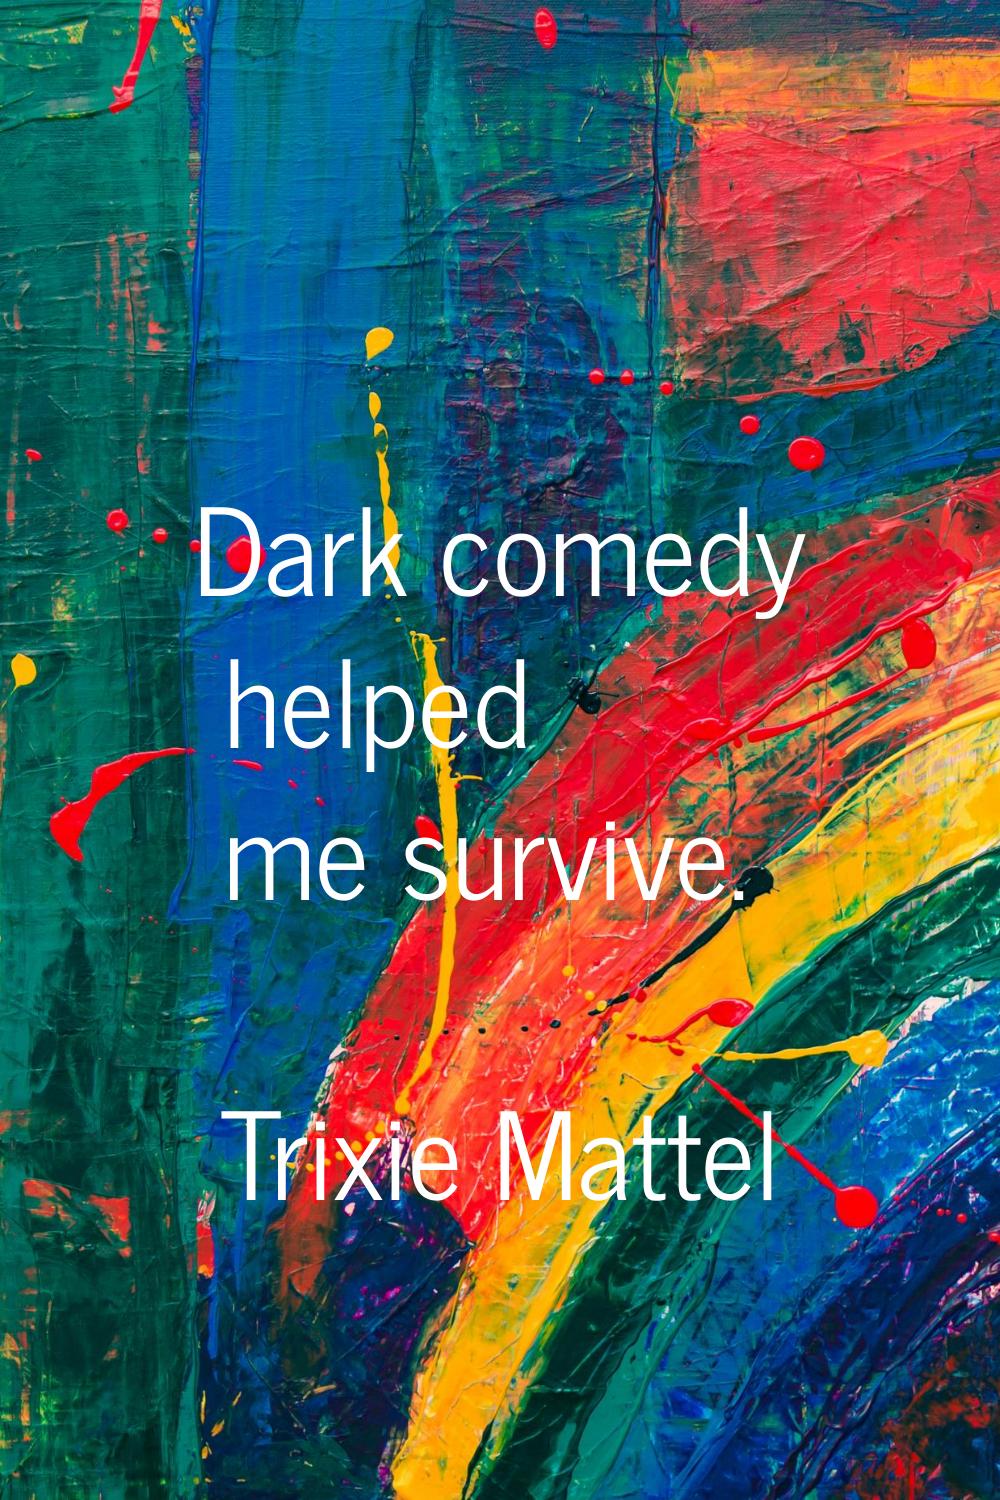 Dark comedy helped me survive.